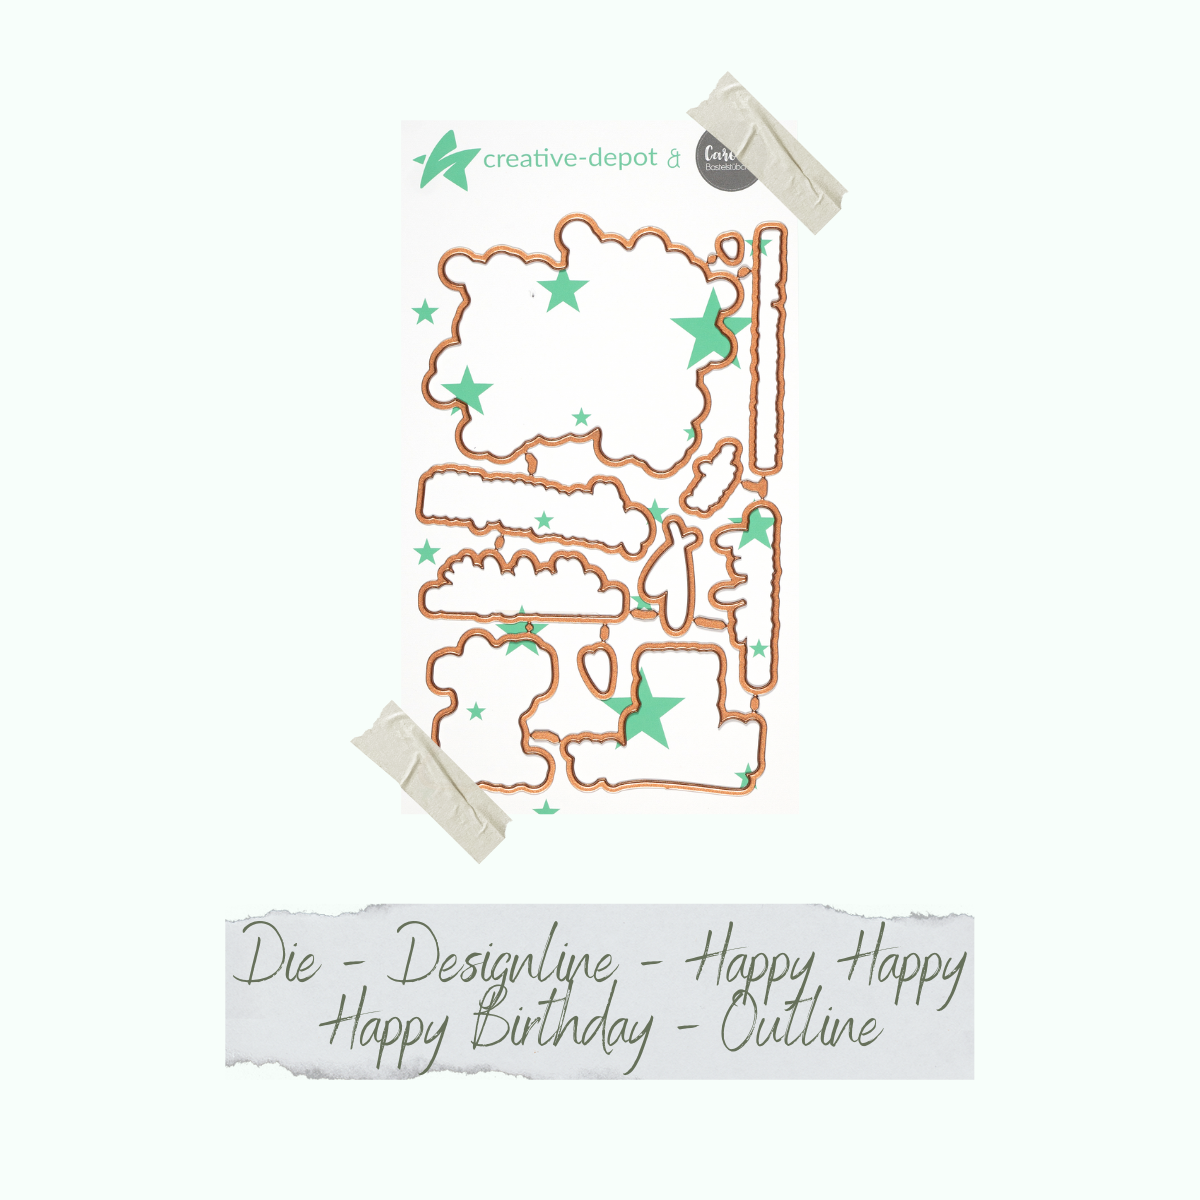 Die - Designline - Happy Happy Happy Birthday - Outline